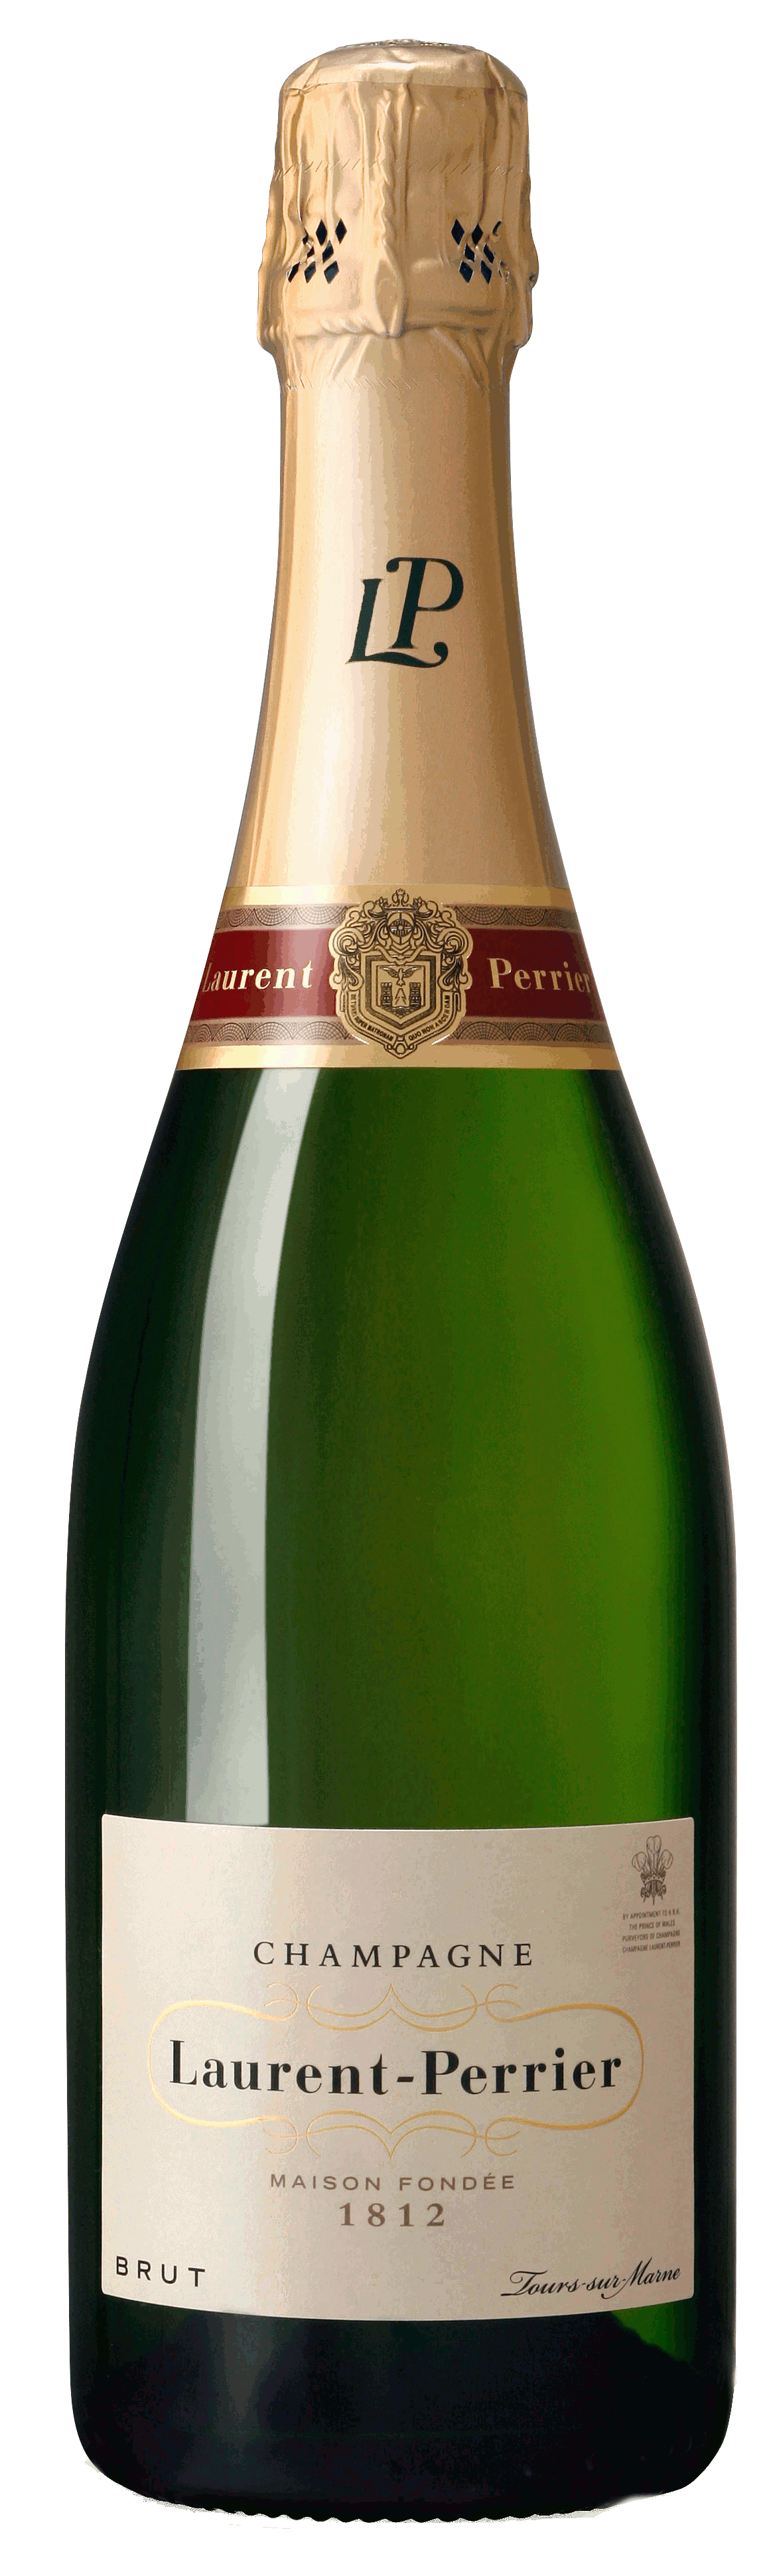 Champagner Laurent-Perrier La Cuvee brut